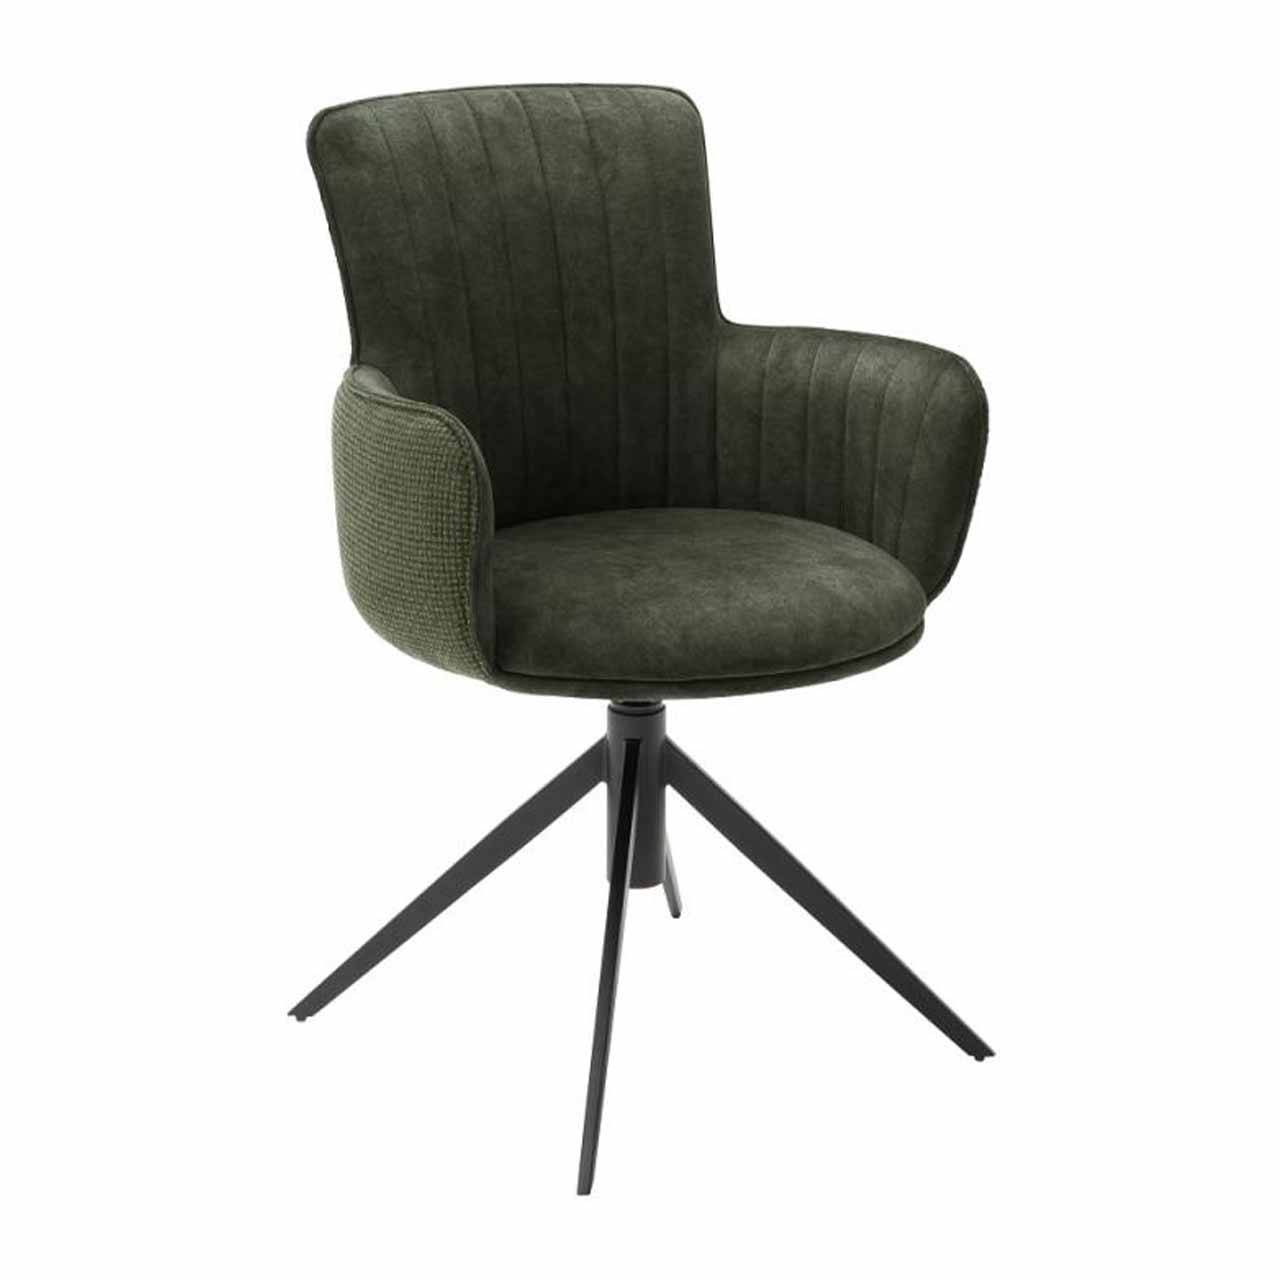 Savona - Grau Farbe: Stuhl